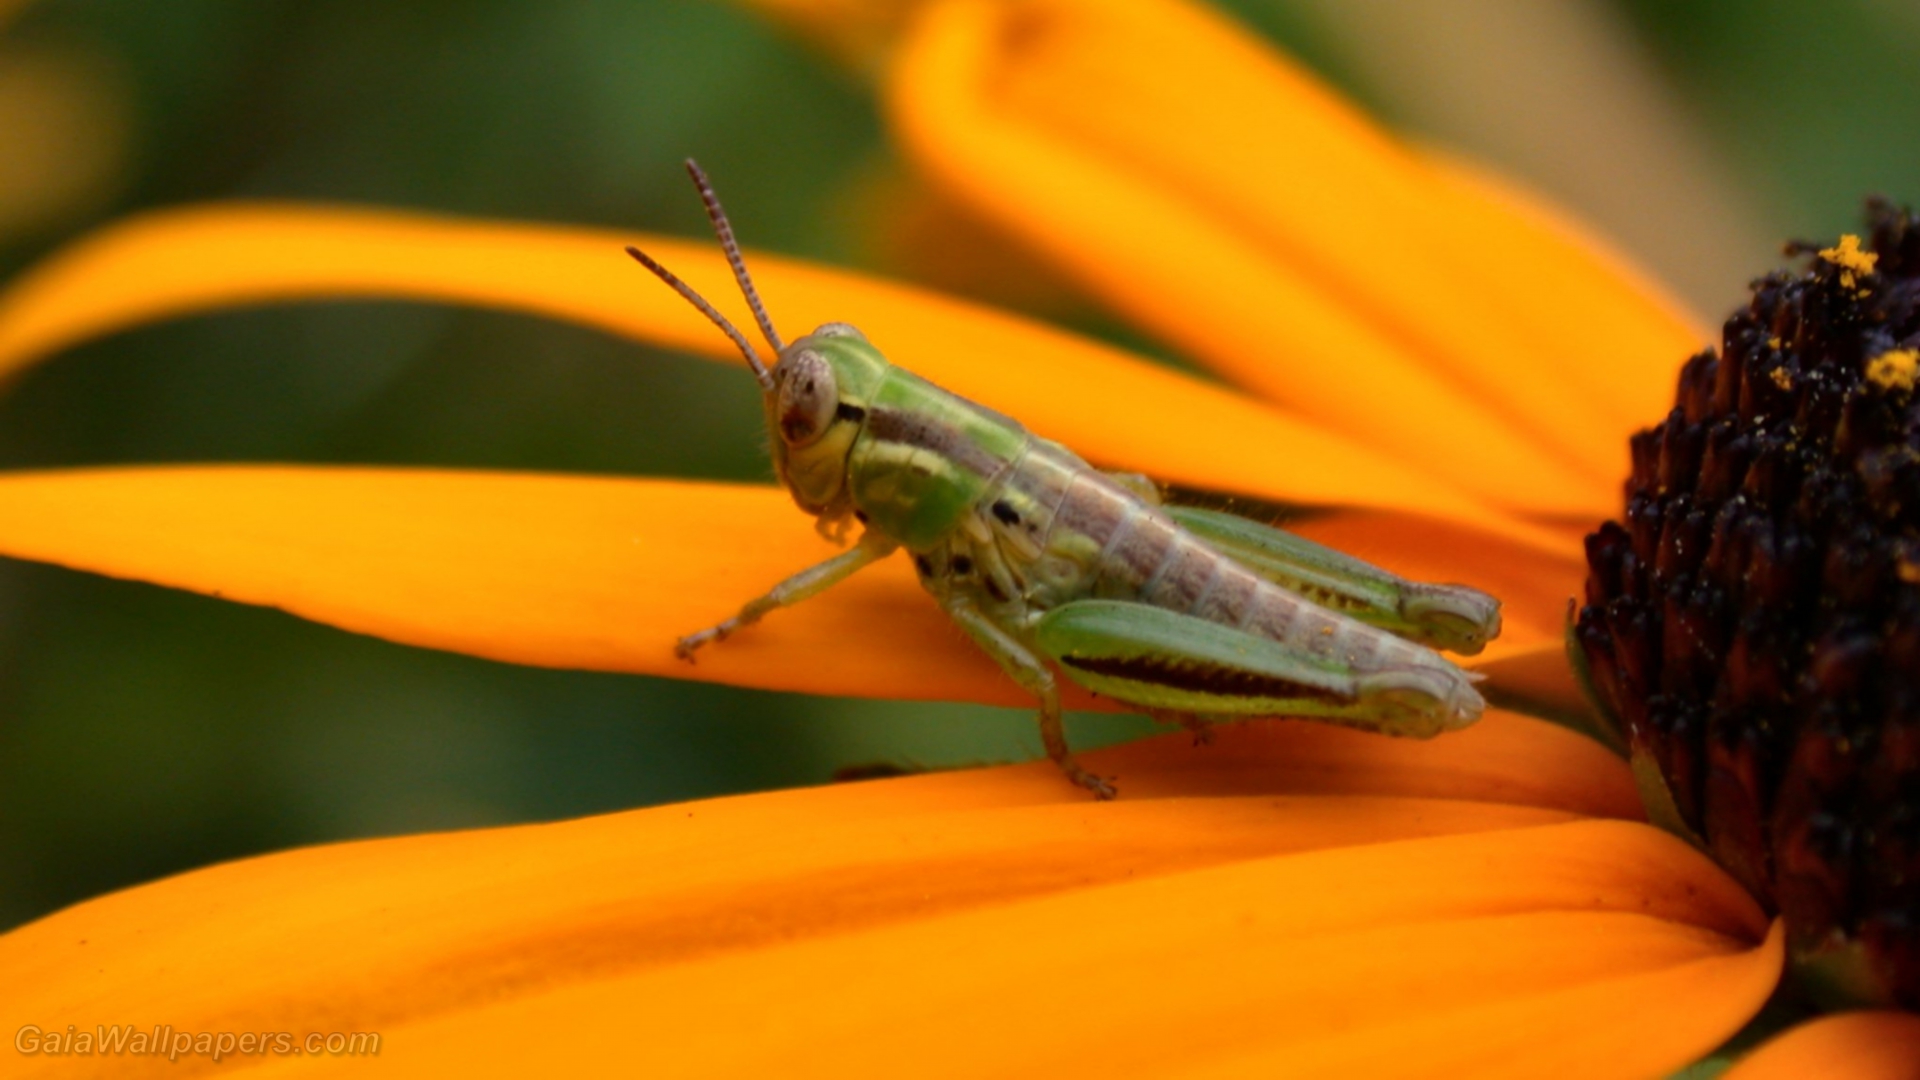 Grasshopper on a Rudbeckia - Free desktop wallpapers